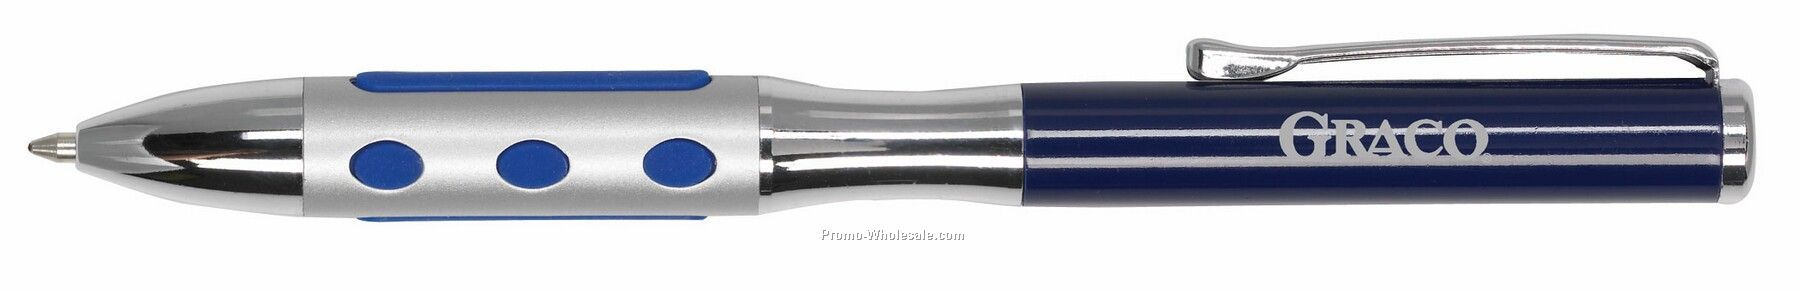 Monaco European Design Pen With Metallic Aluminum - Next Day